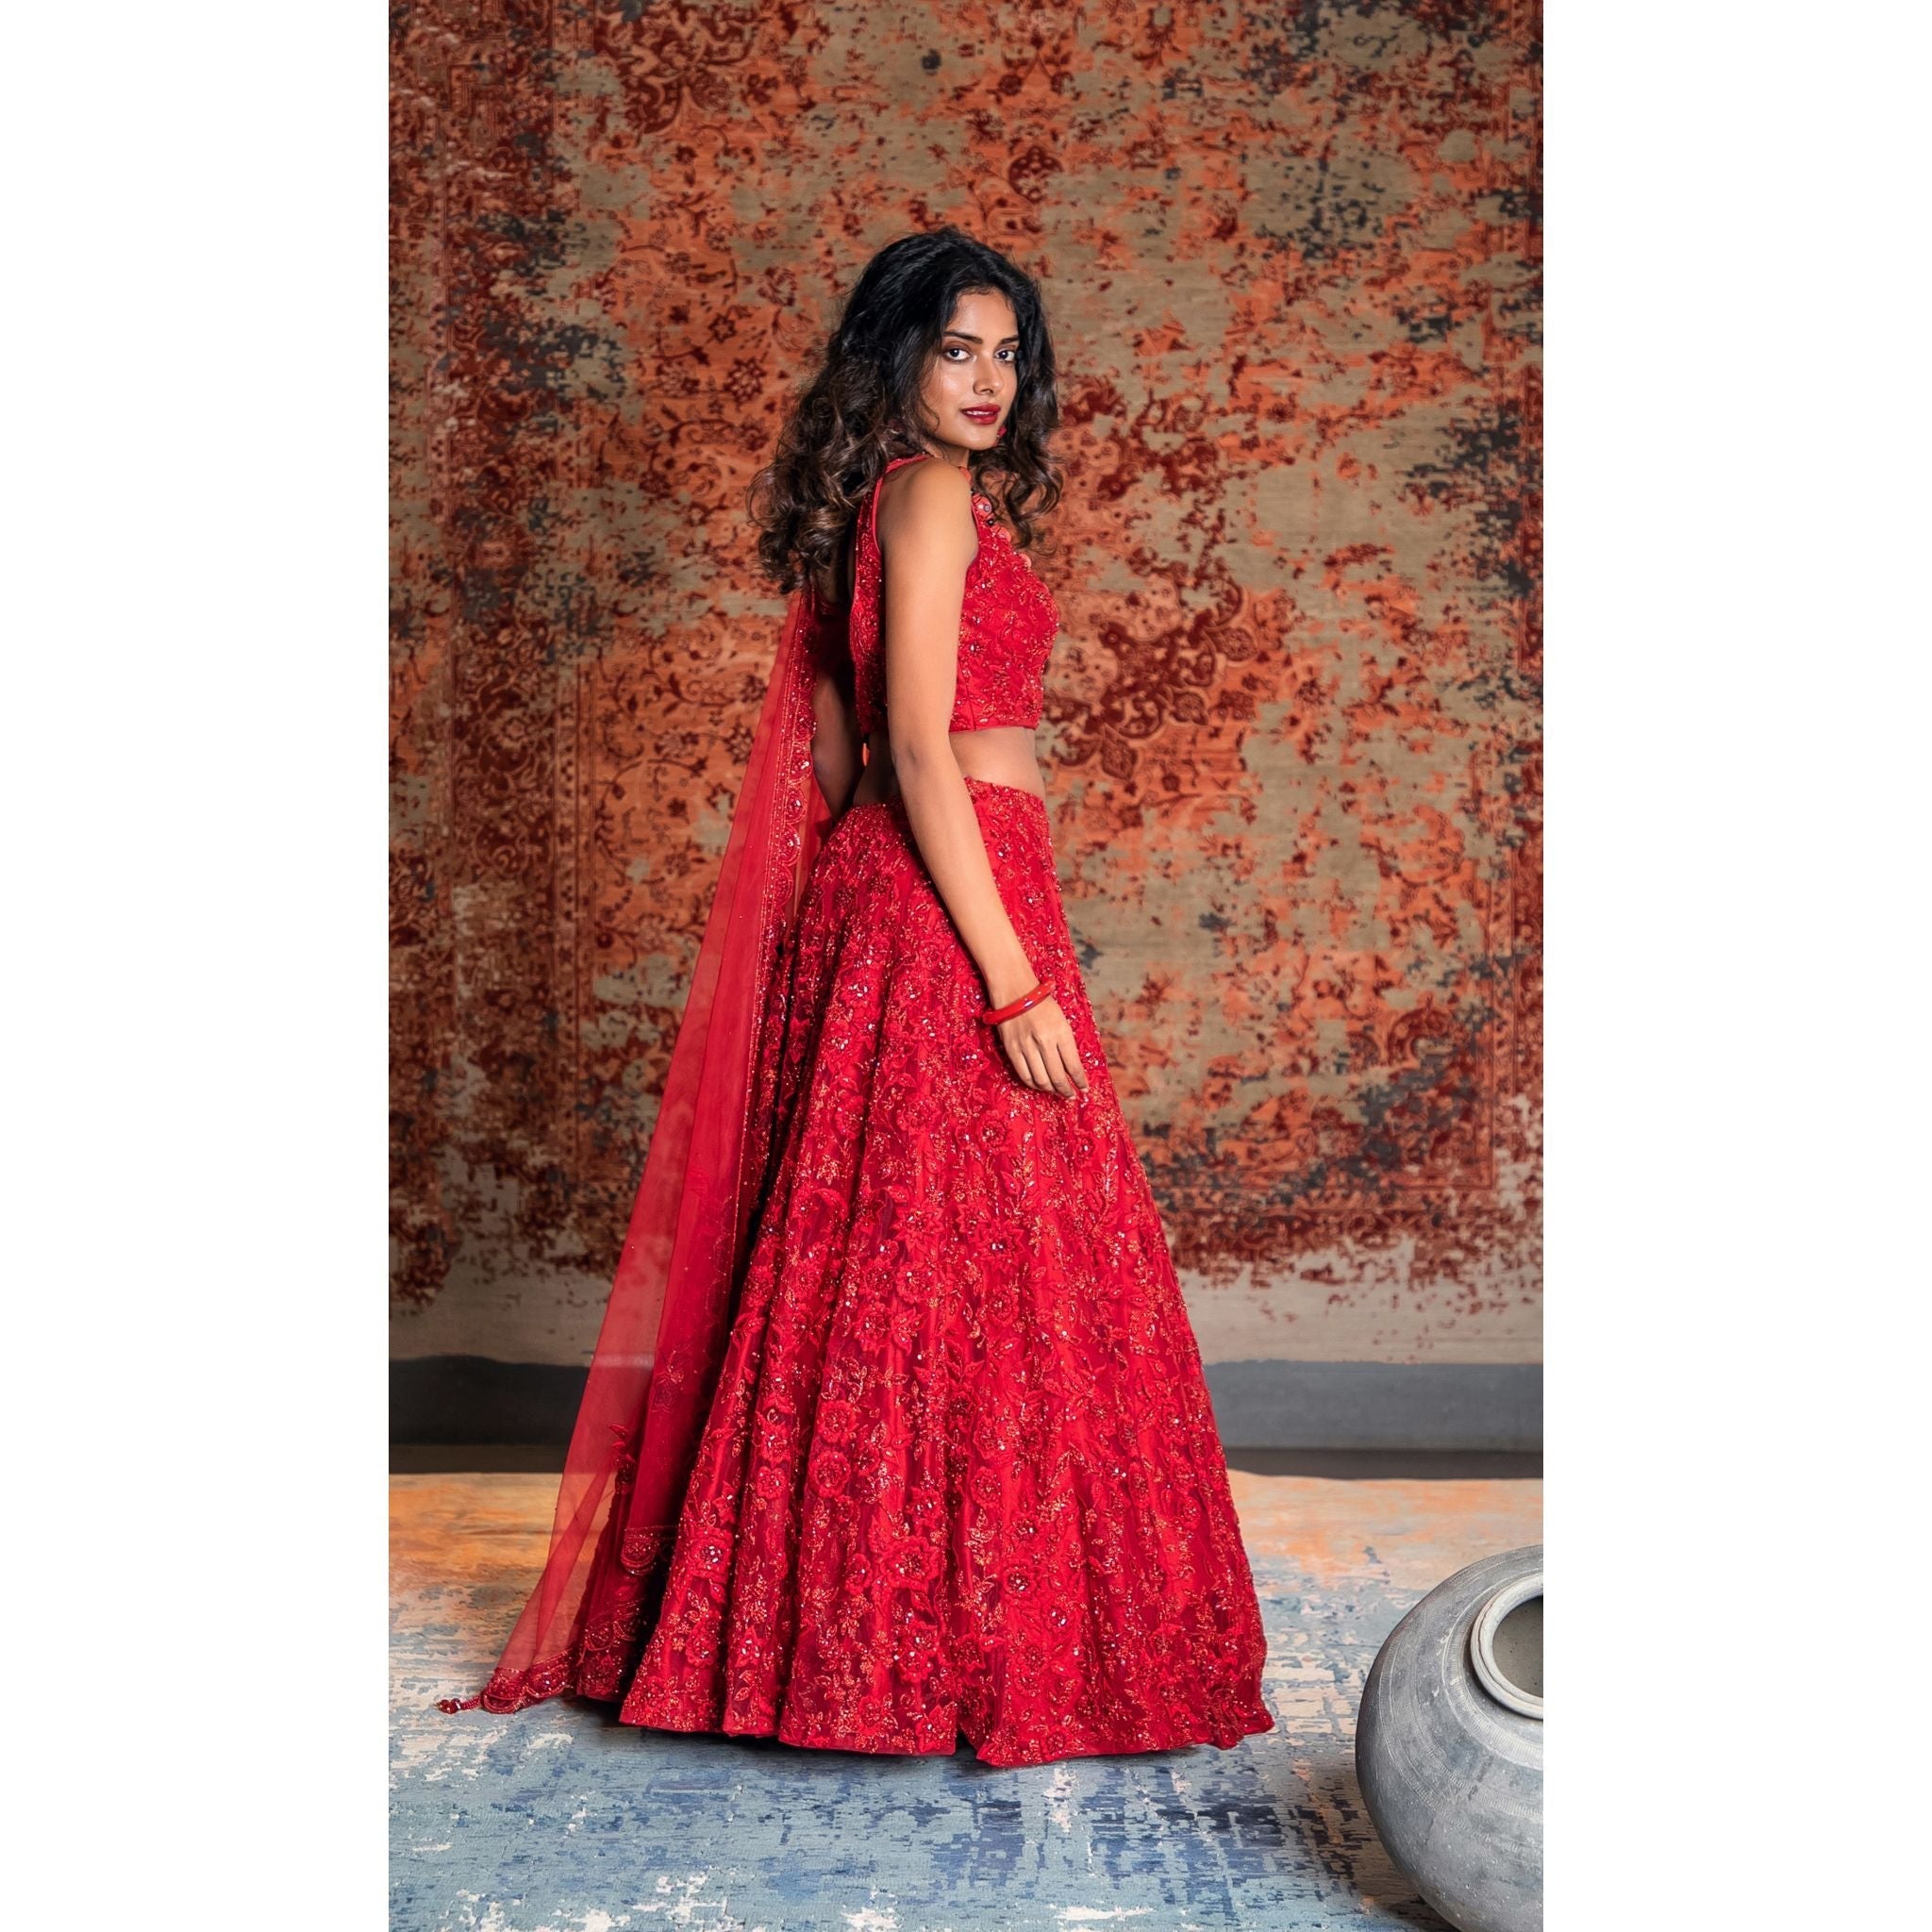 Scarlet Red Bagh Embroidered Net Lehenga Set - Indian Designer Bridal Wedding Outfit